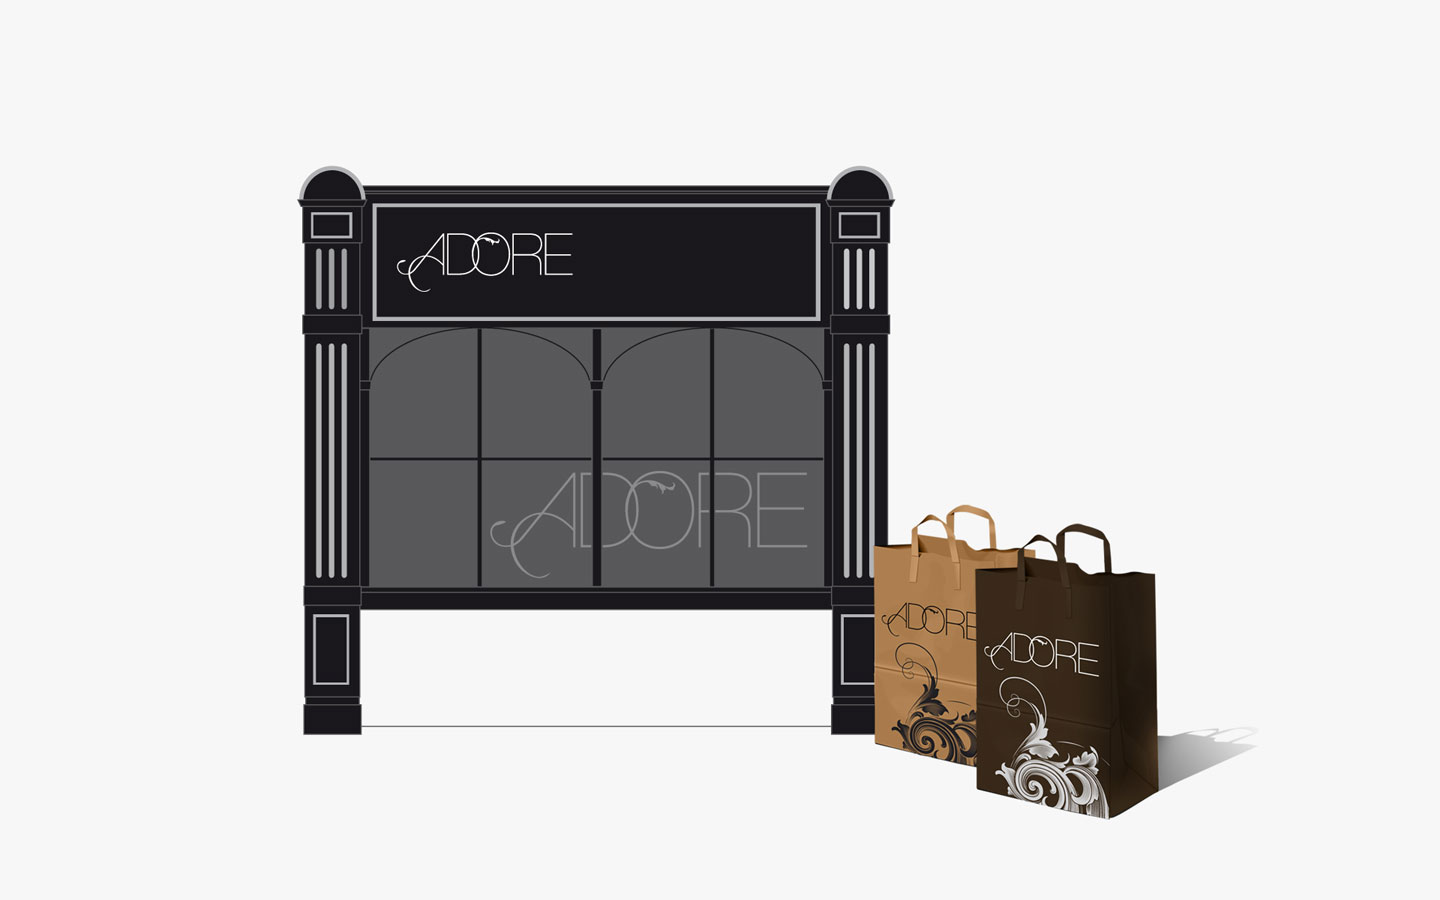 Adore Boutique Cleethorpes, Logo Design in Signage and Bag Design